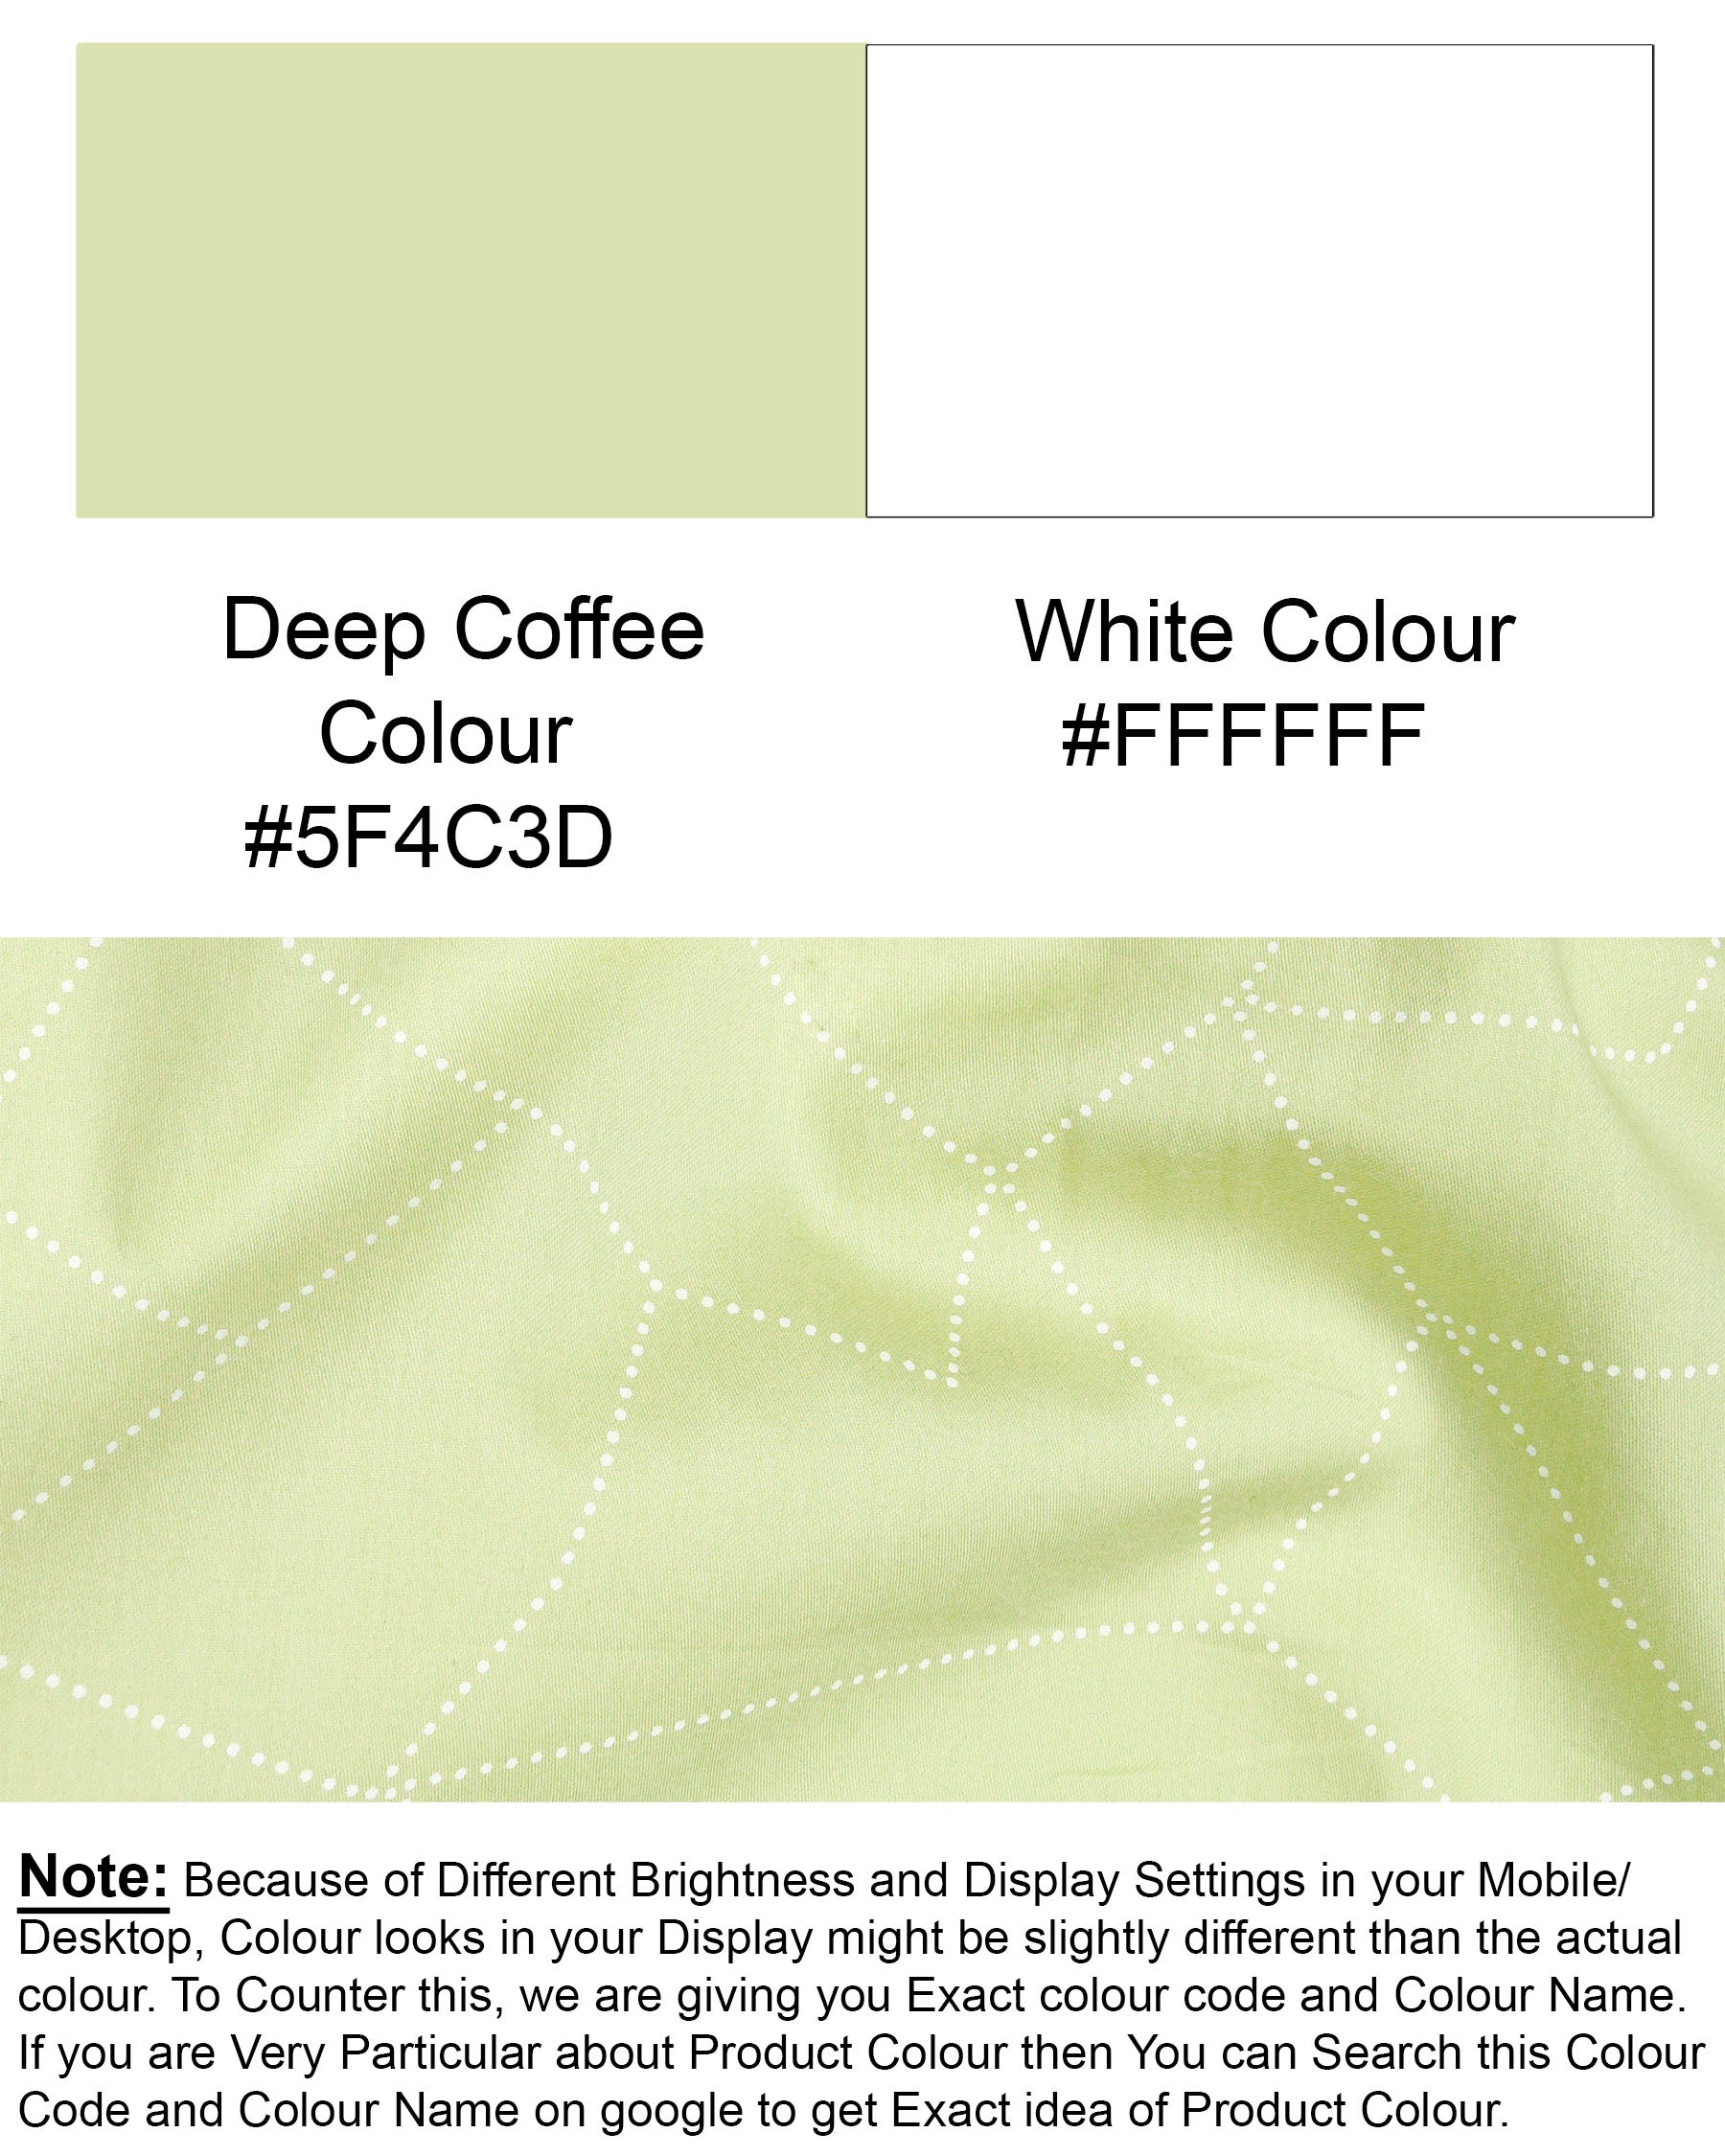 Deep Coffee Green Geometric Printed Super Soft Premium Cotton Shirt 7650-M-38, 7650-M-H-38, 7650-M-39,7650-M-H-39, 7650-M-40, 7650-M-H-40, 7650-M-42, 7650-M-H-42, 7650-M-44, 7650-M-H-44, 7650-M-46, 7650-M-H-46, 7650-M-48, 7650-M-H-48, 7650-M-50, 7650-M-H-50, 7650-M-52, 7650-M-H-52